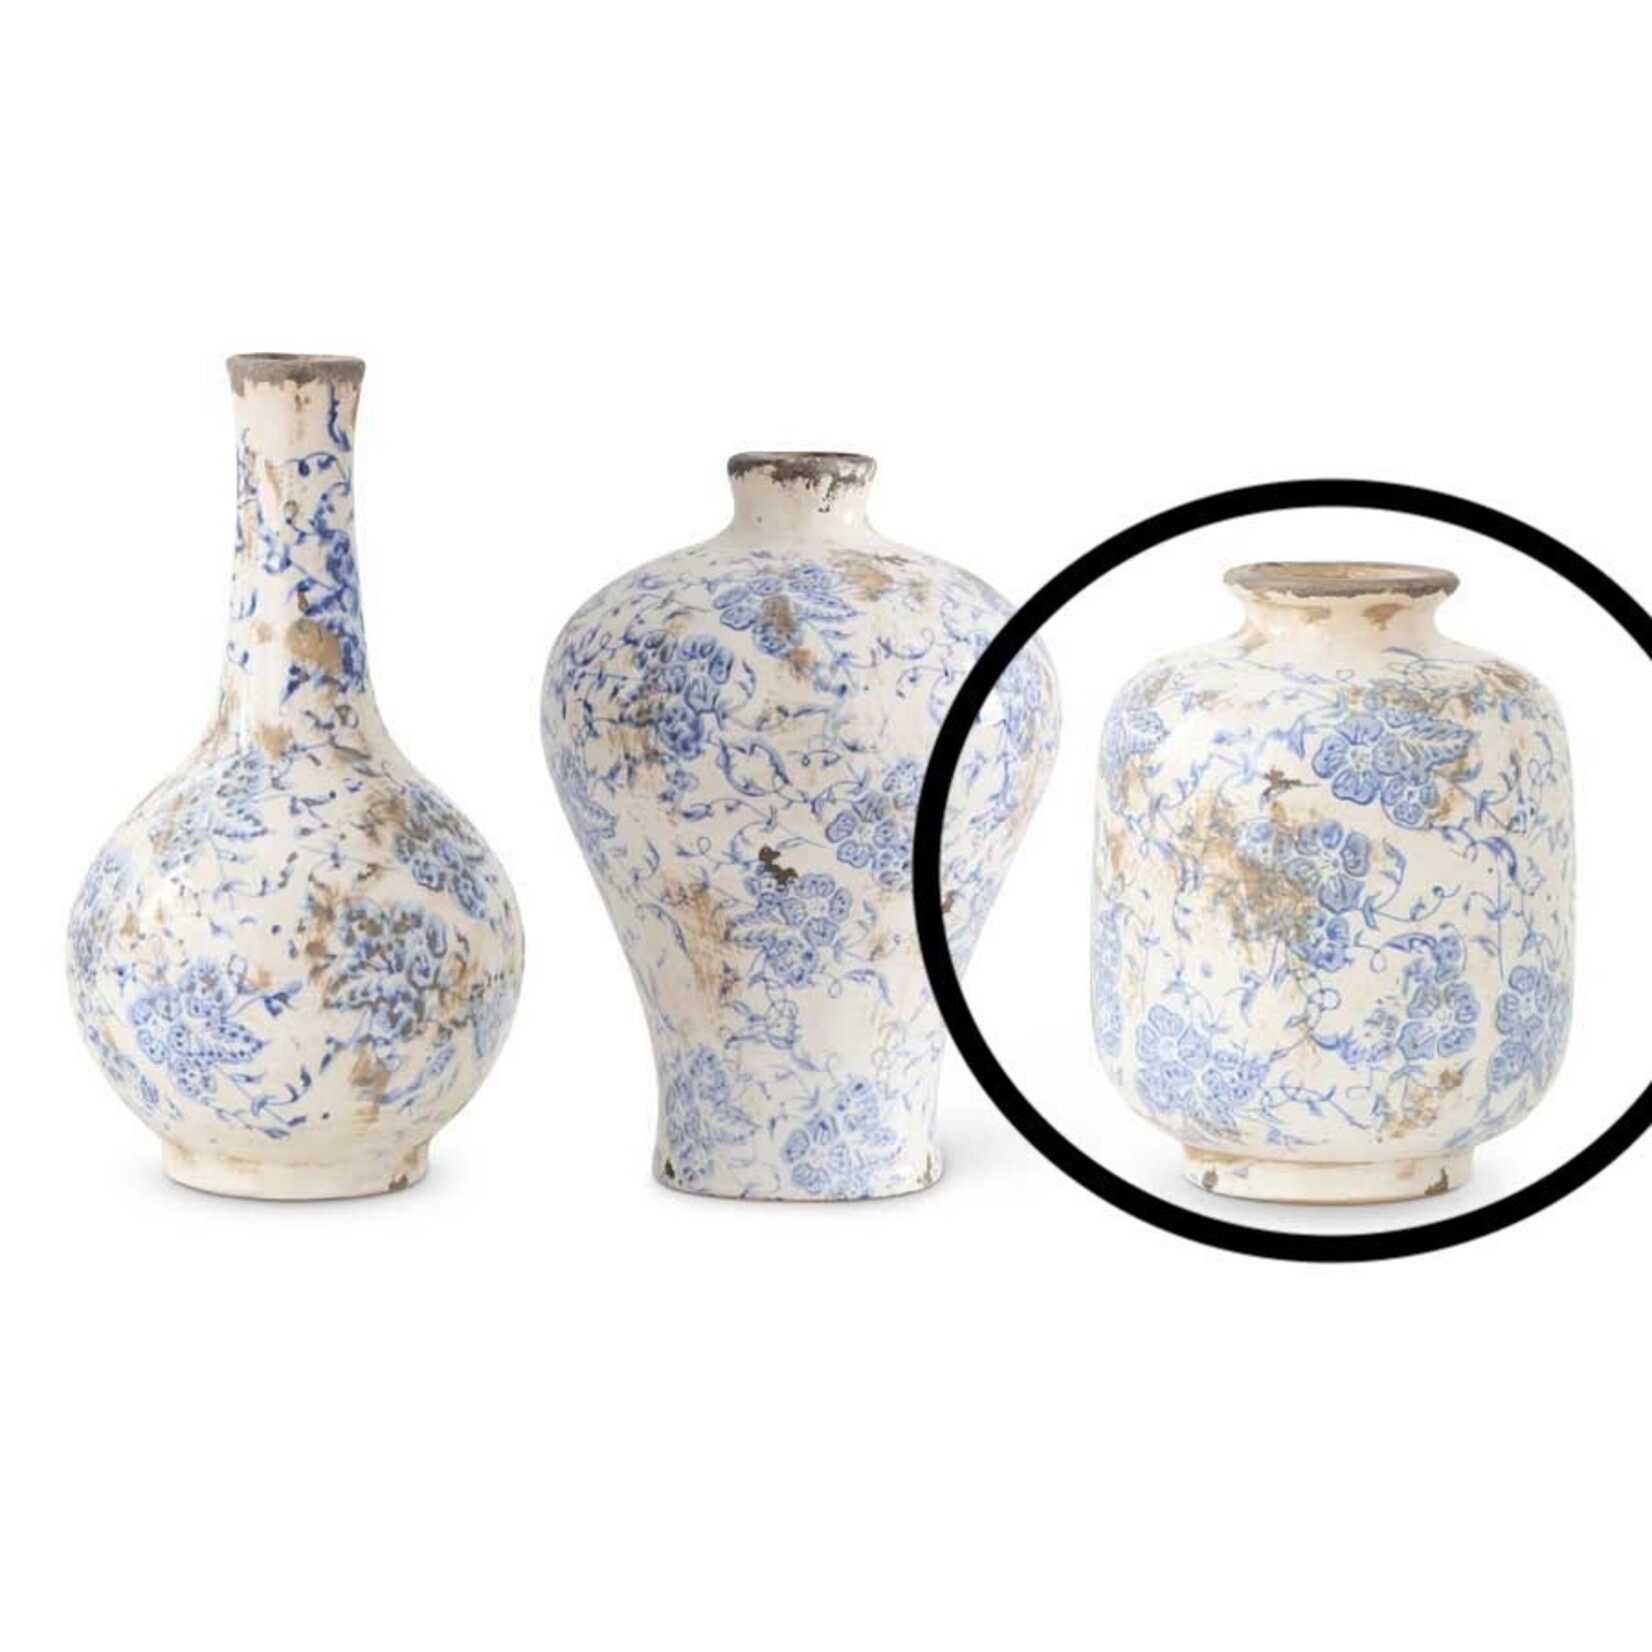 K & K Interiors 5.75 Inch Blue and White Ceramic Vase